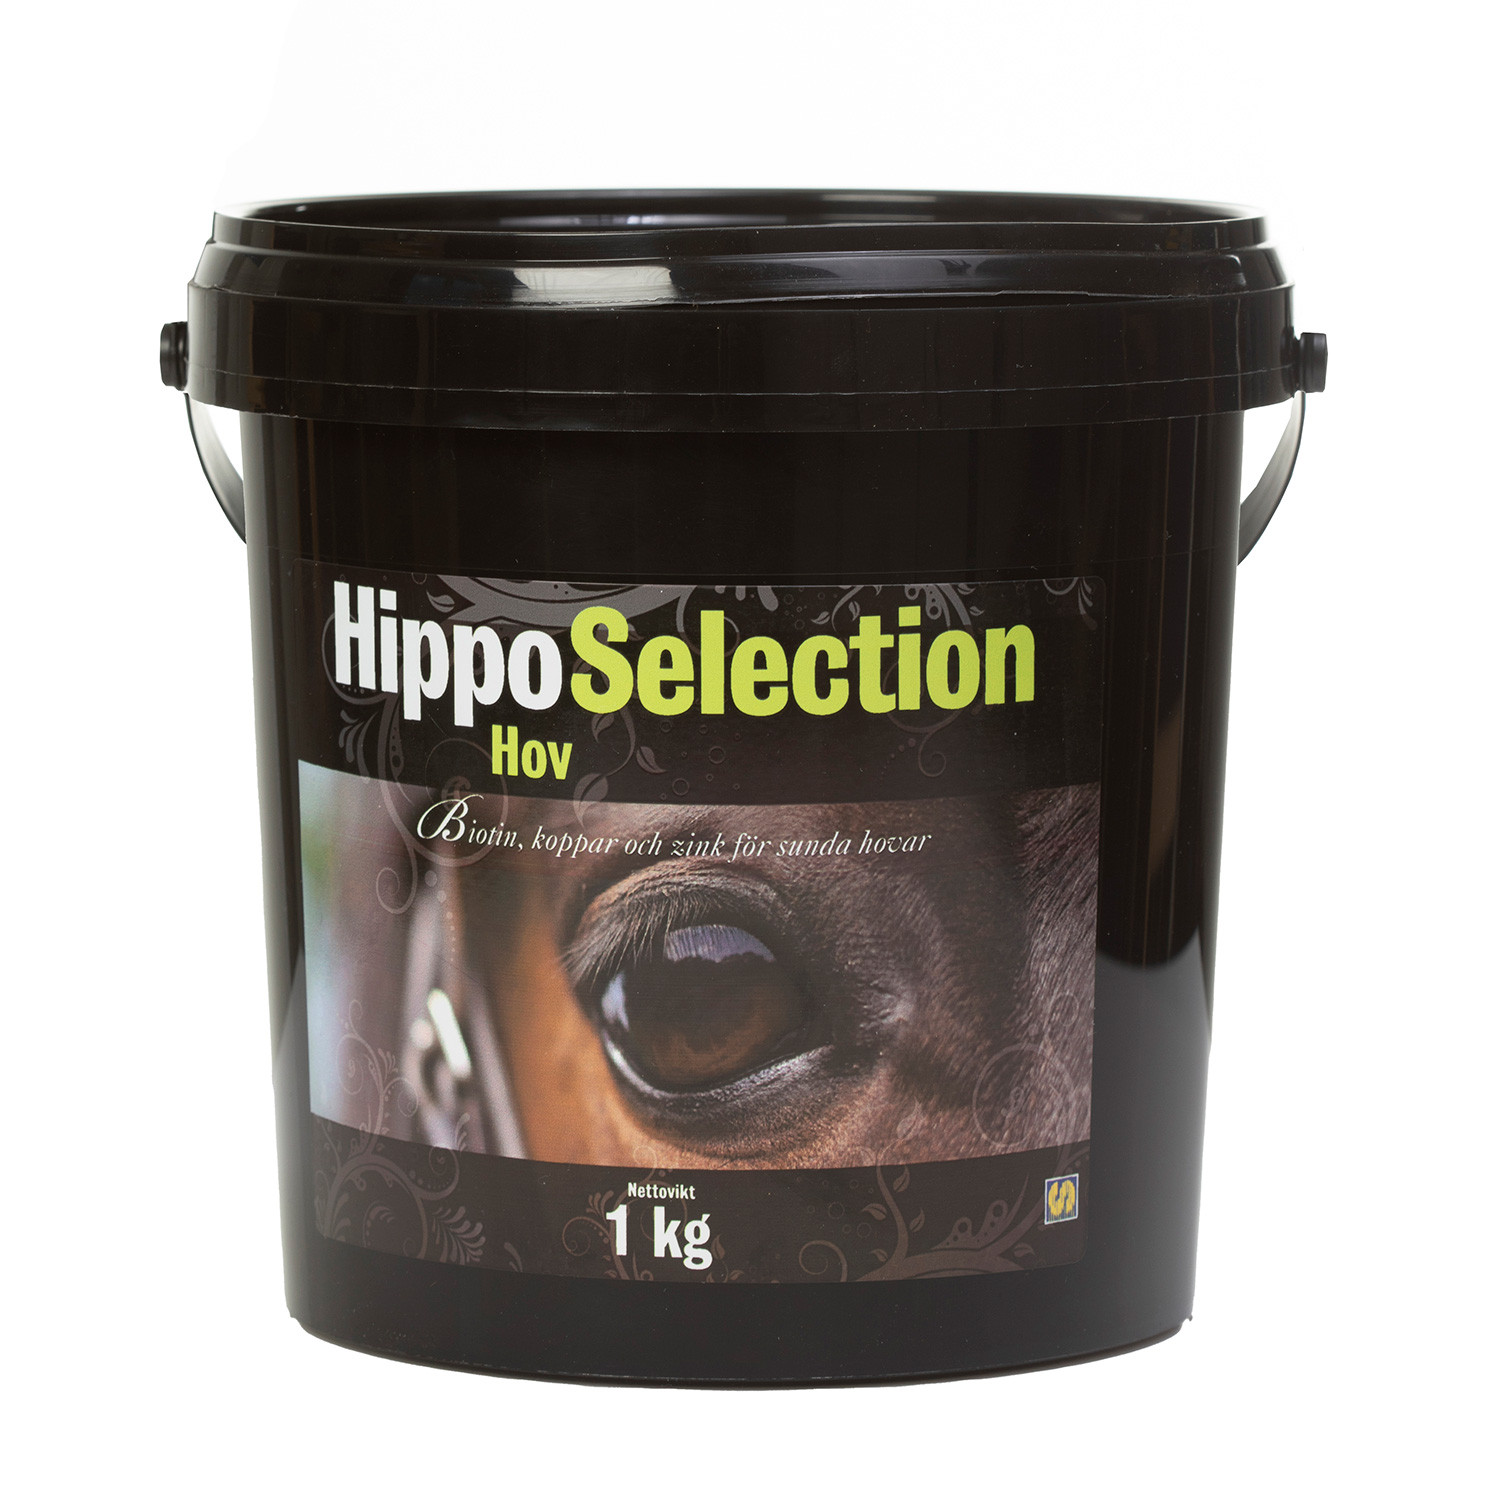 Hippo selection hov 1 kg